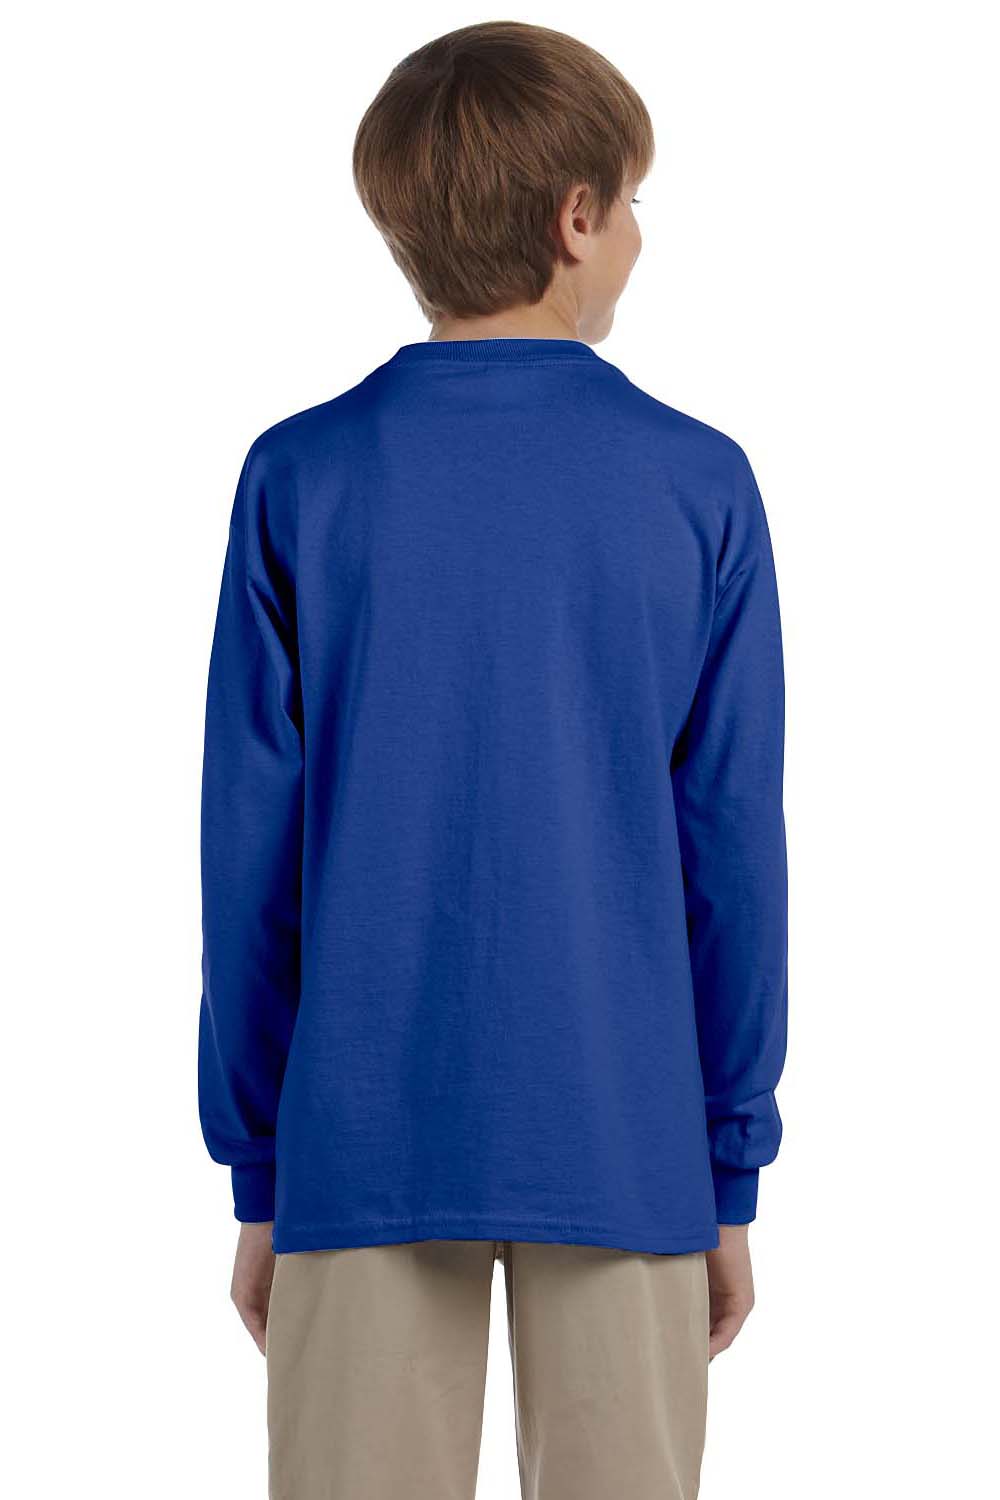 Jerzees 29BL Youth Dri-Power Moisture Wicking Long Sleeve Crewneck T-Shirt Royal Blue Back